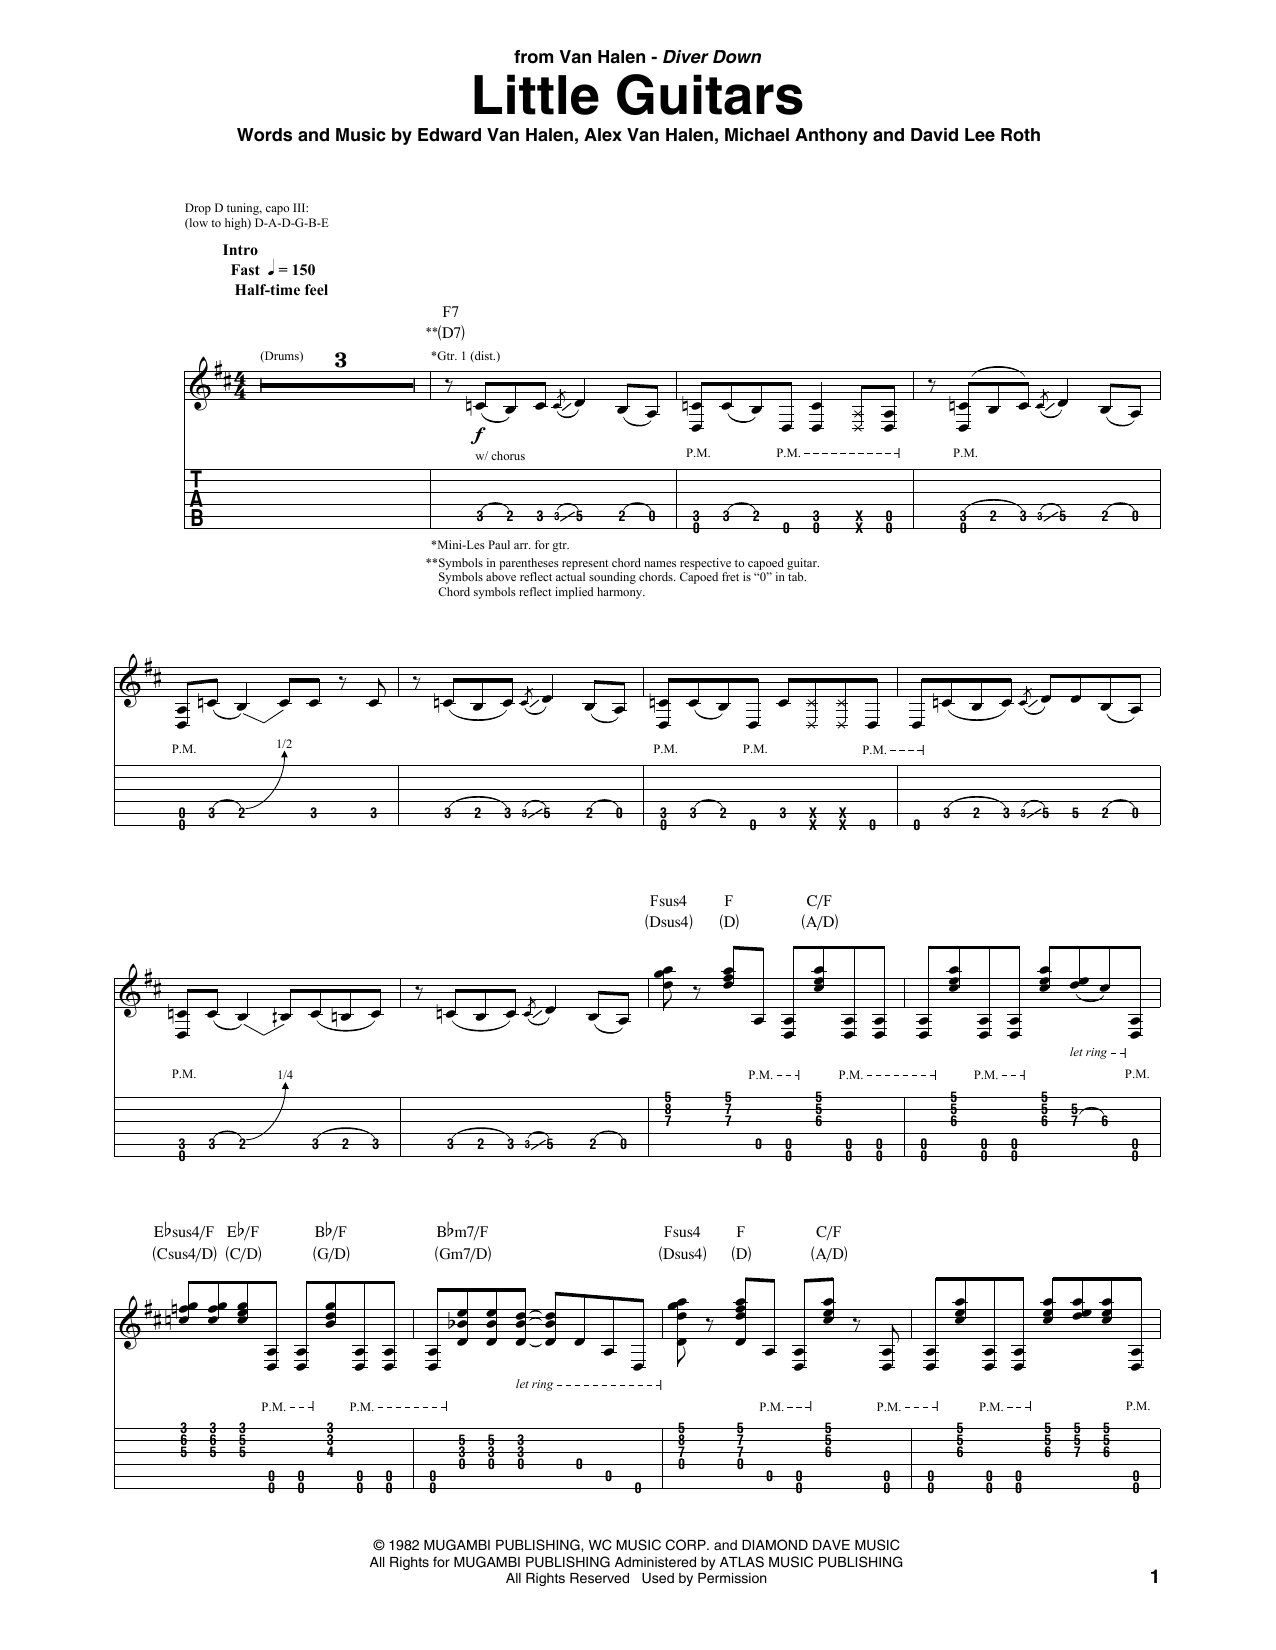 Van Halen Little Guitars Sheet Music Notes & Chords for Guitar Tab - Download or Print PDF